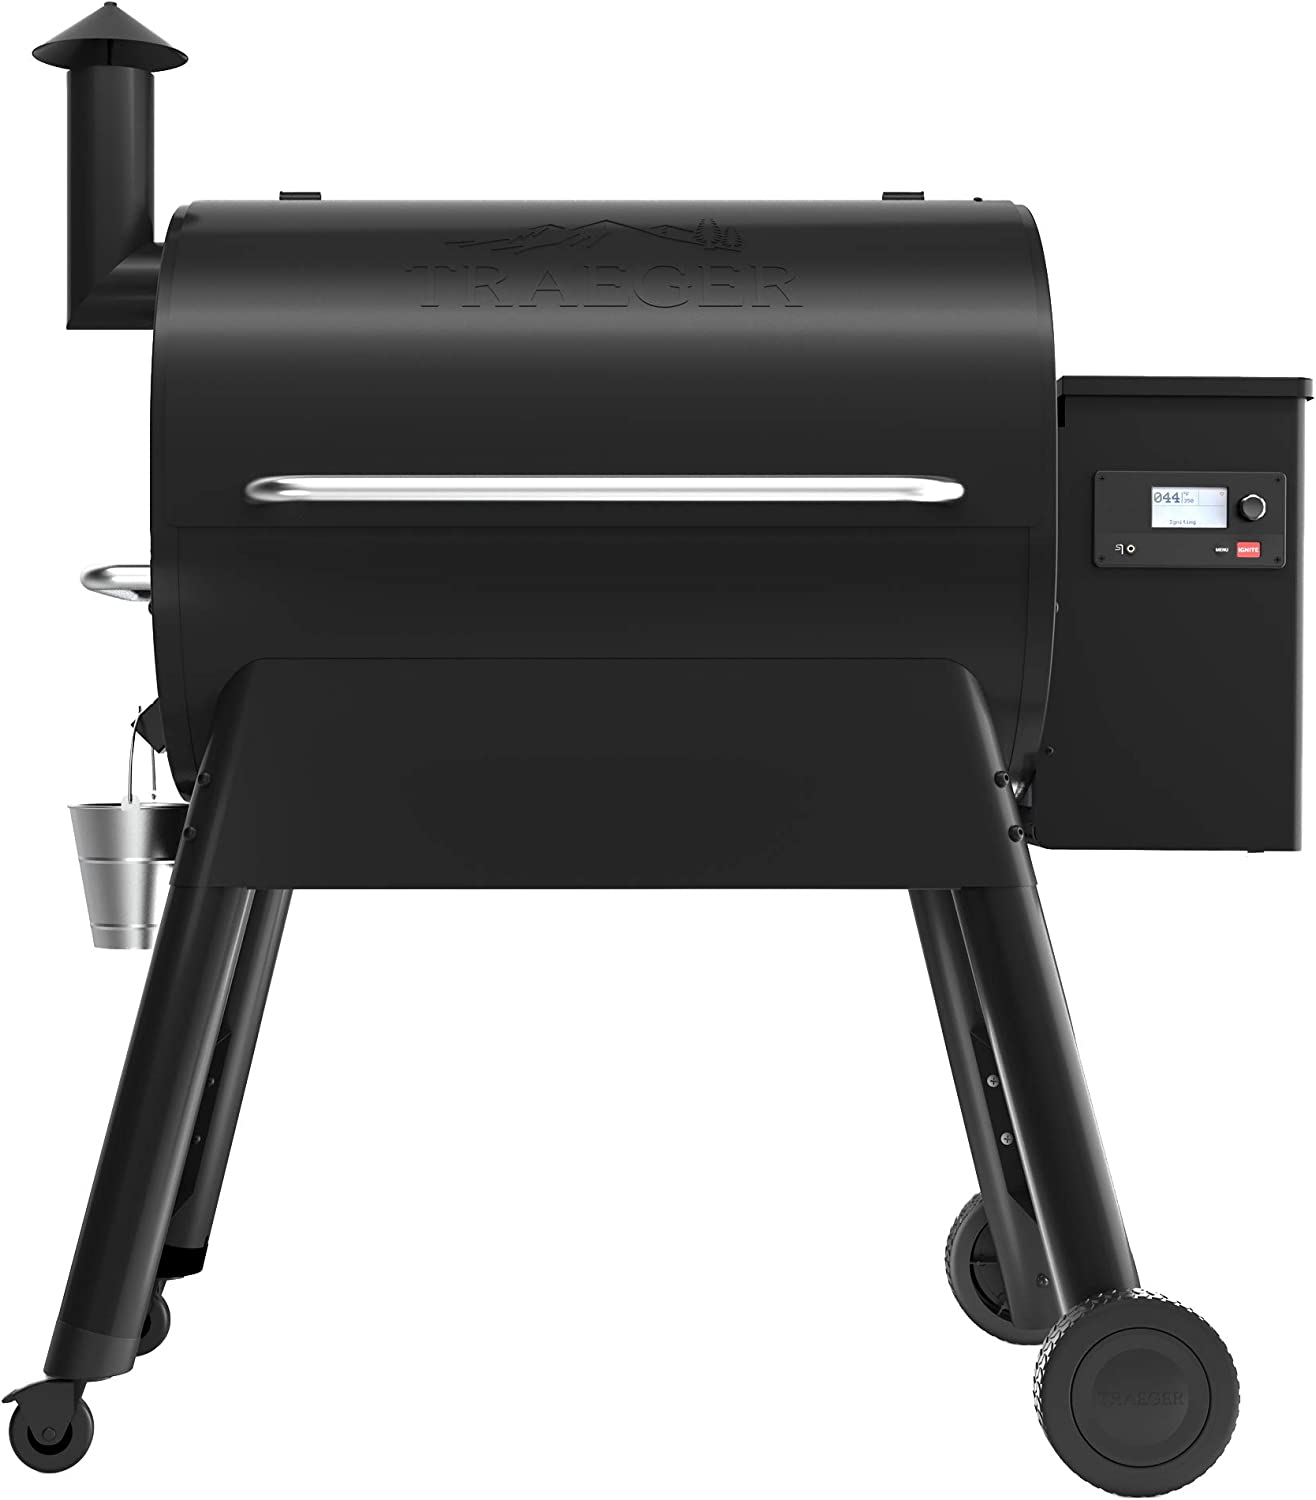 Traeger Pro 780 Black Wood Pellet Grill